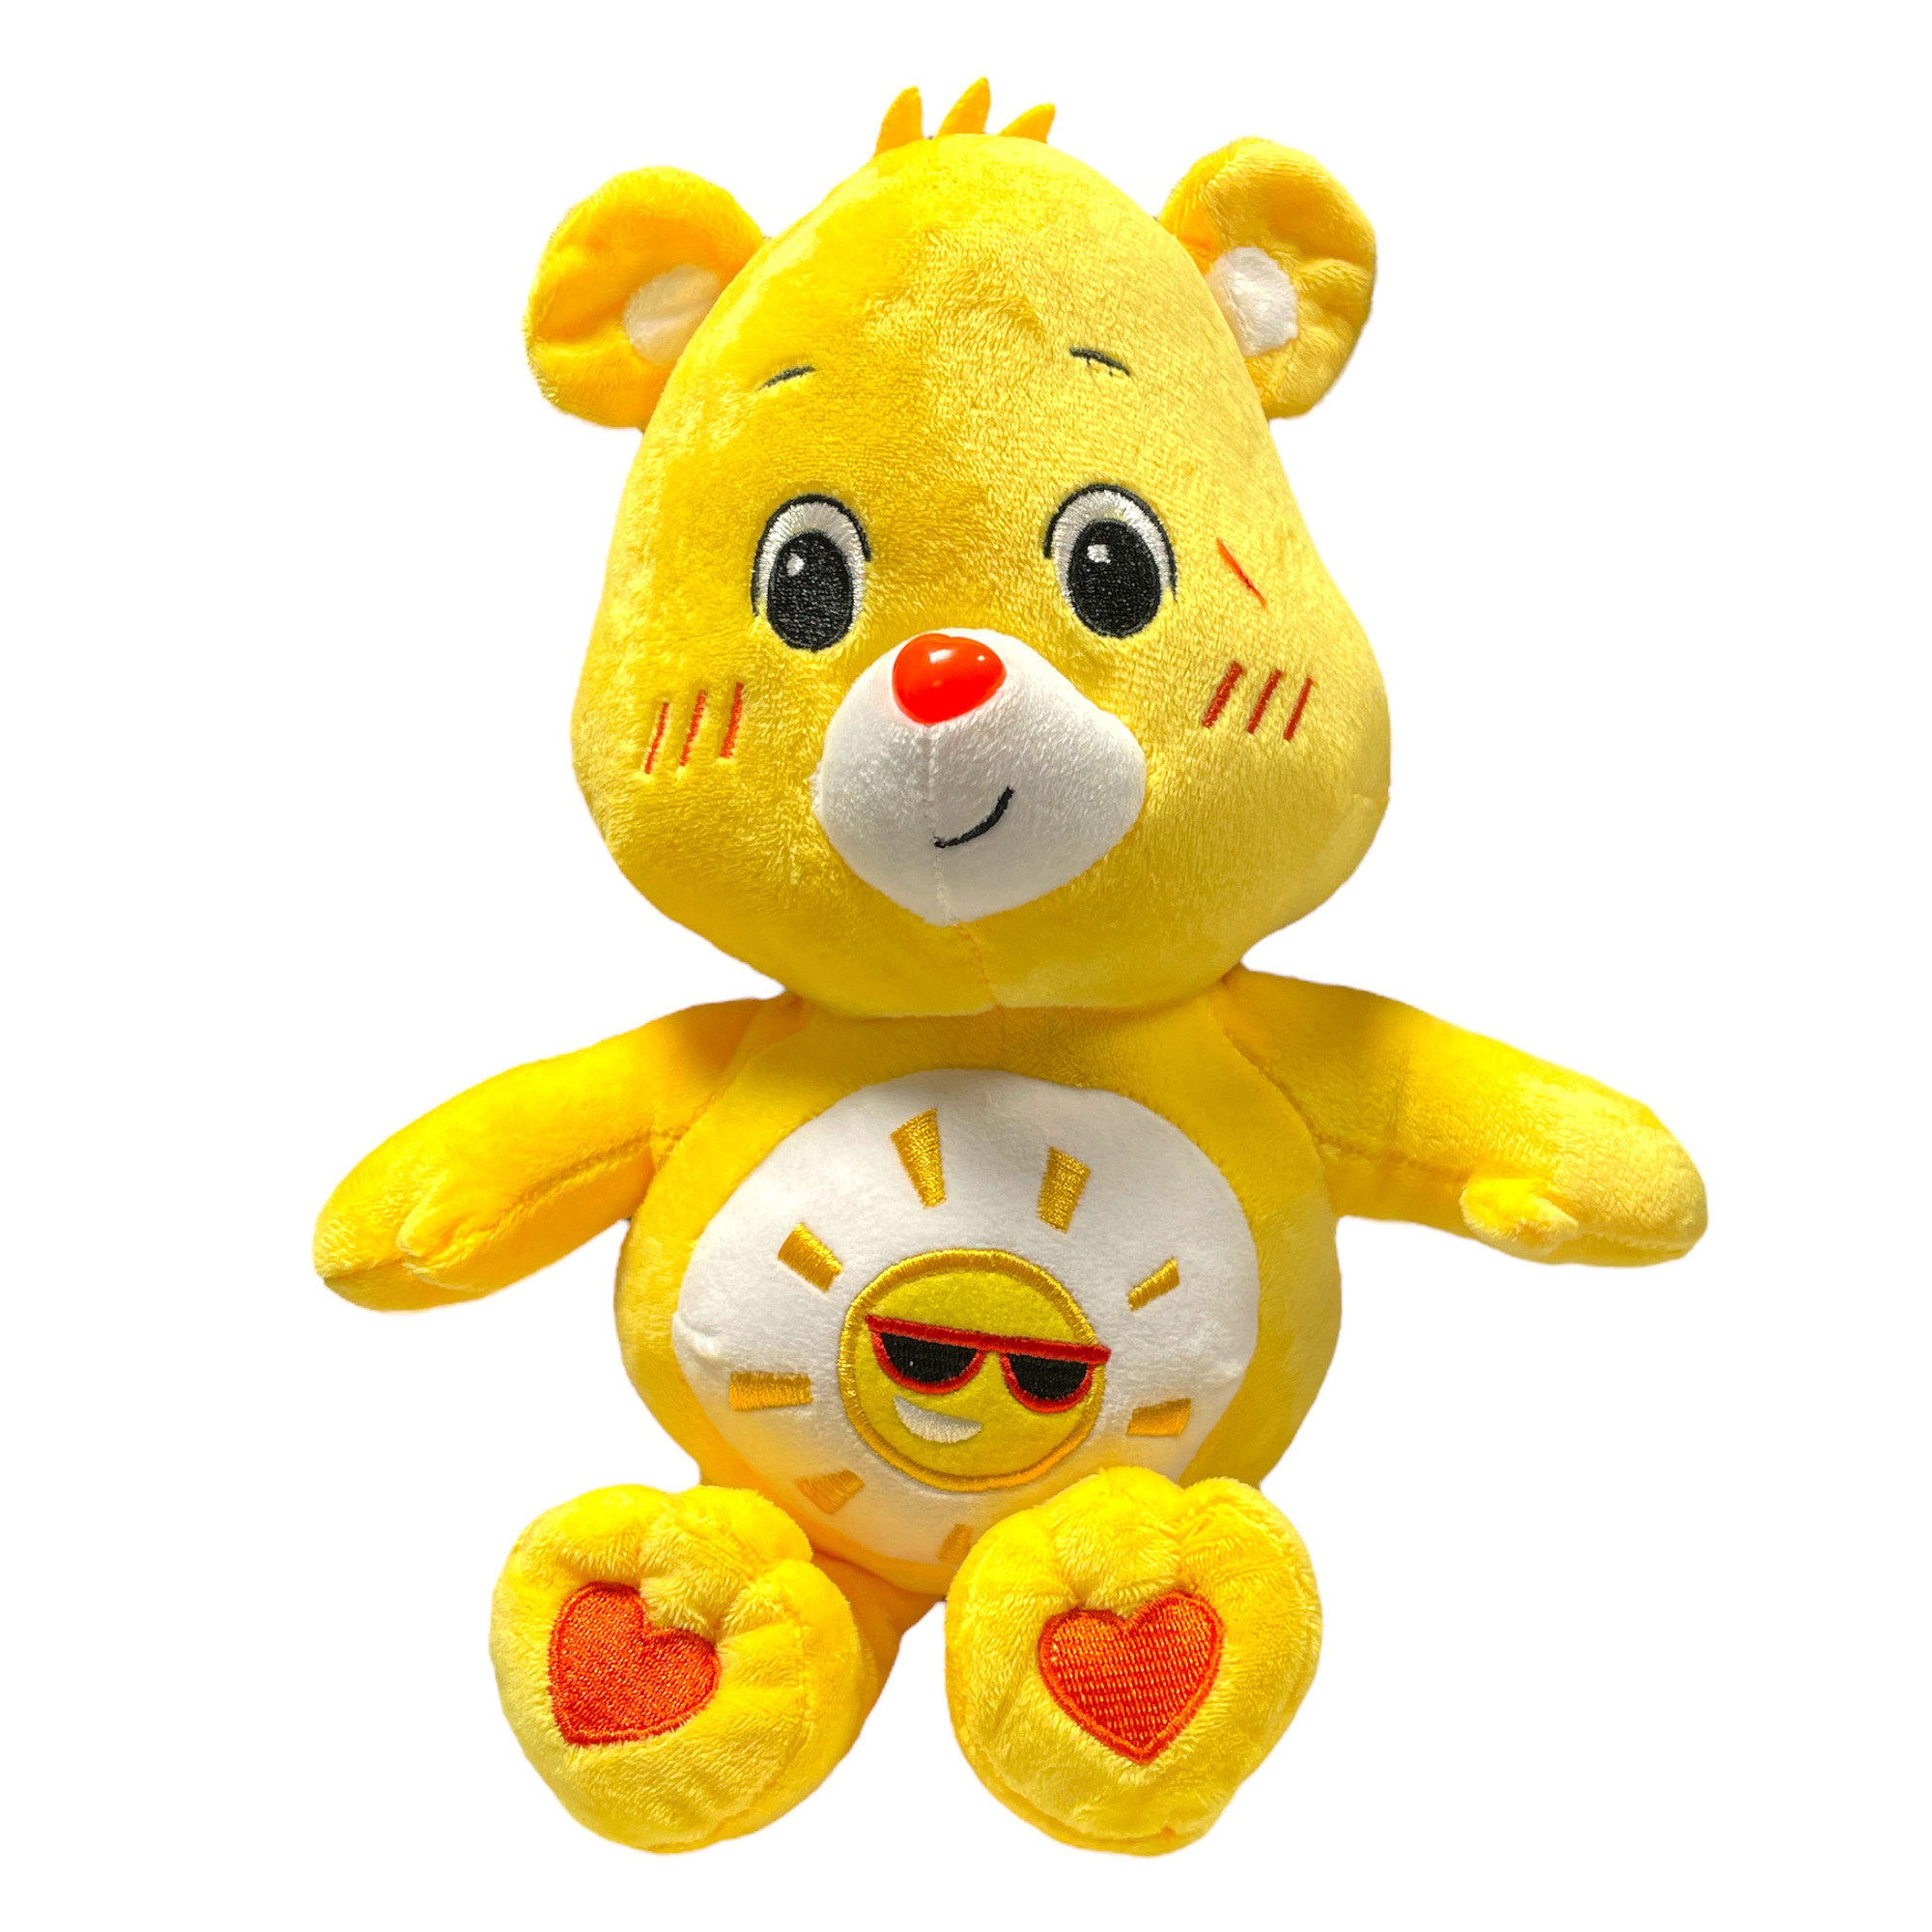 Sonnenscheinbärchi - Sunshine Bear Plüschfigur (28 cm) - Glücksbärchis